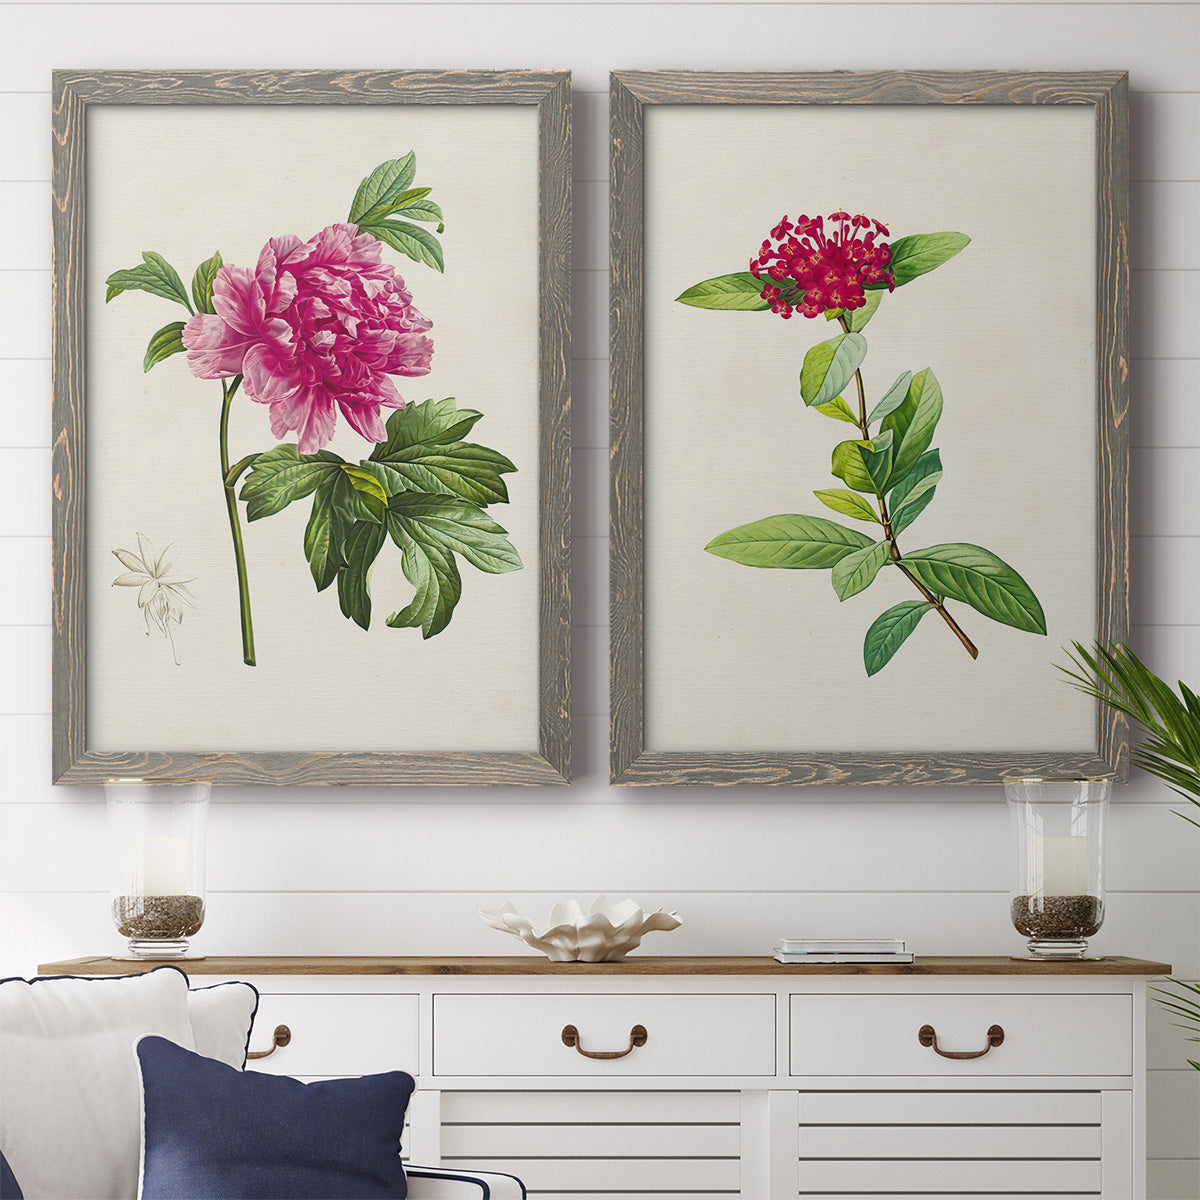 Pretty Pink Botanicals I - Premium Framed Canvas 2 Piece Set - Ready to Hang